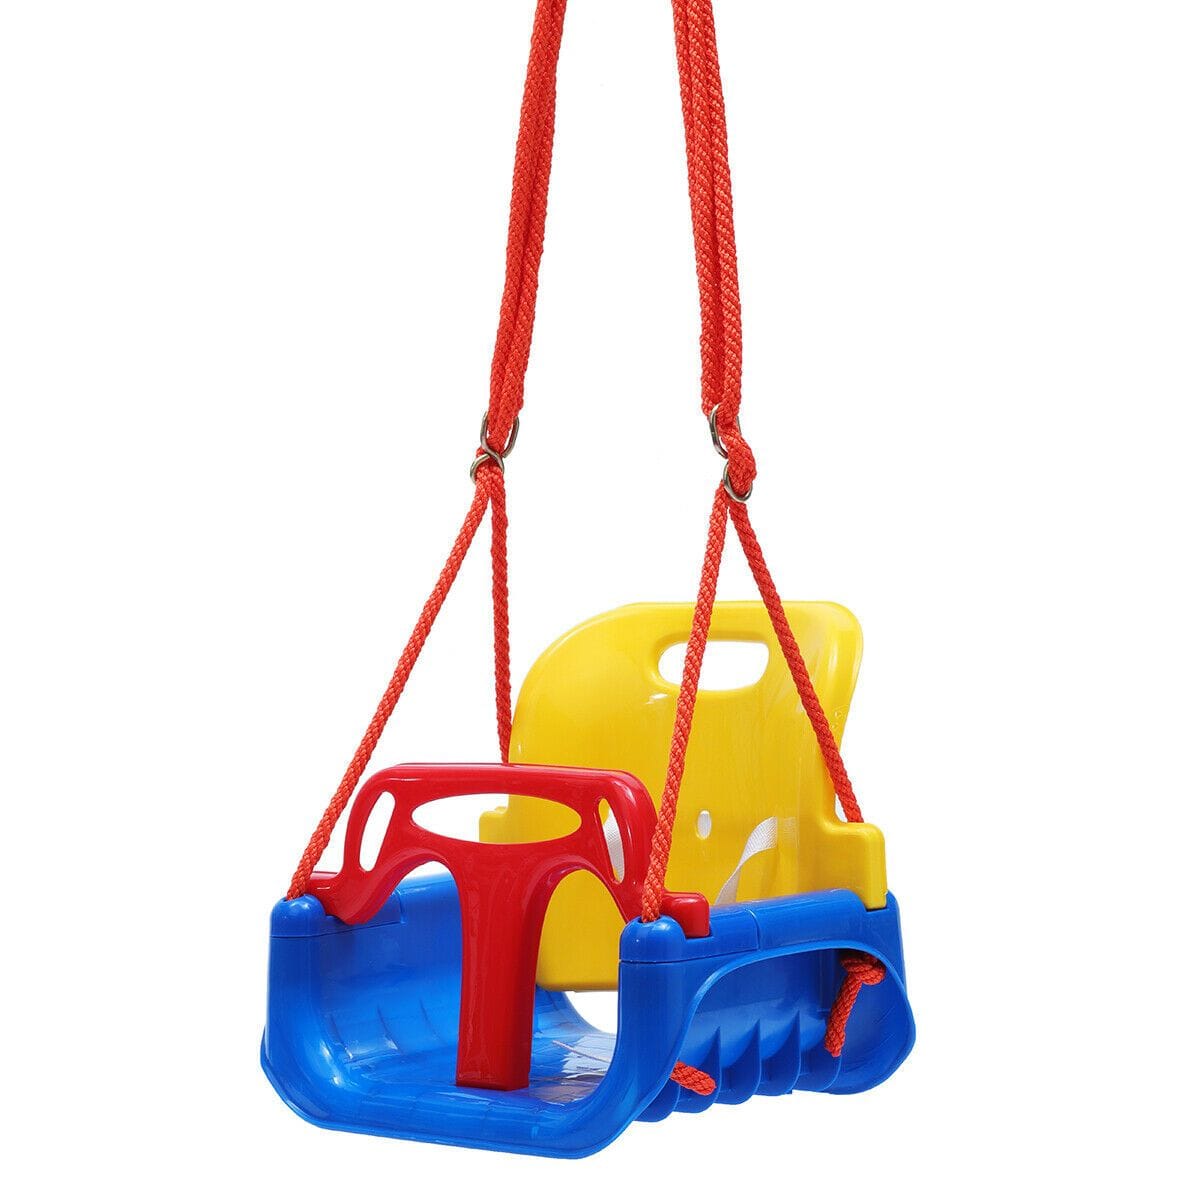 Adjustable Safe Bucket Baby Swing Seat with Seat Belt Kids Outdoor Yard Play - JUST Hammocks